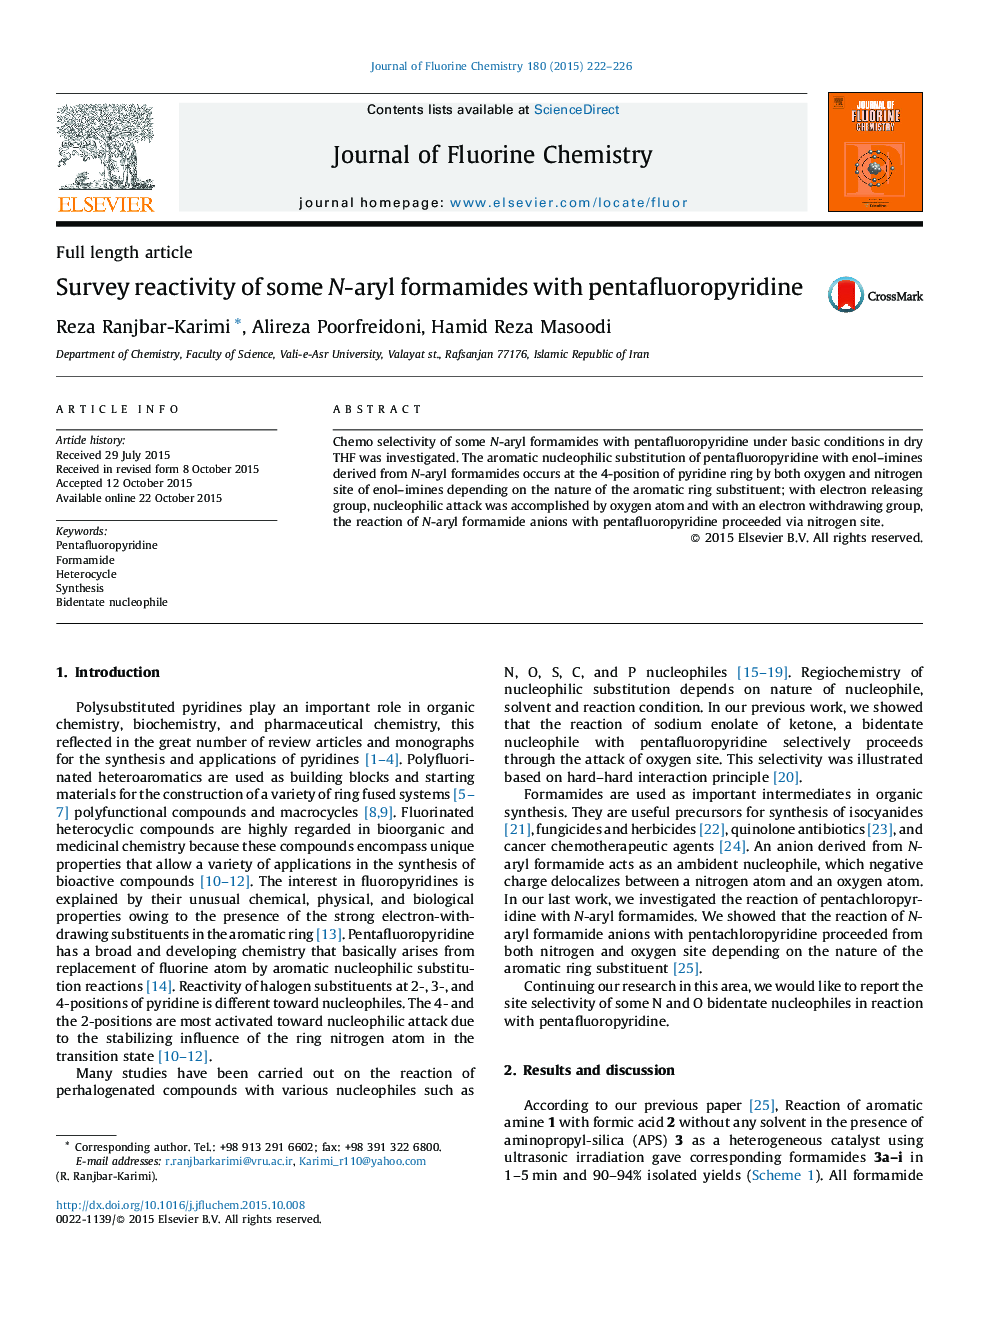 Survey reactivity of some N-aryl formamides with pentafluoropyridine